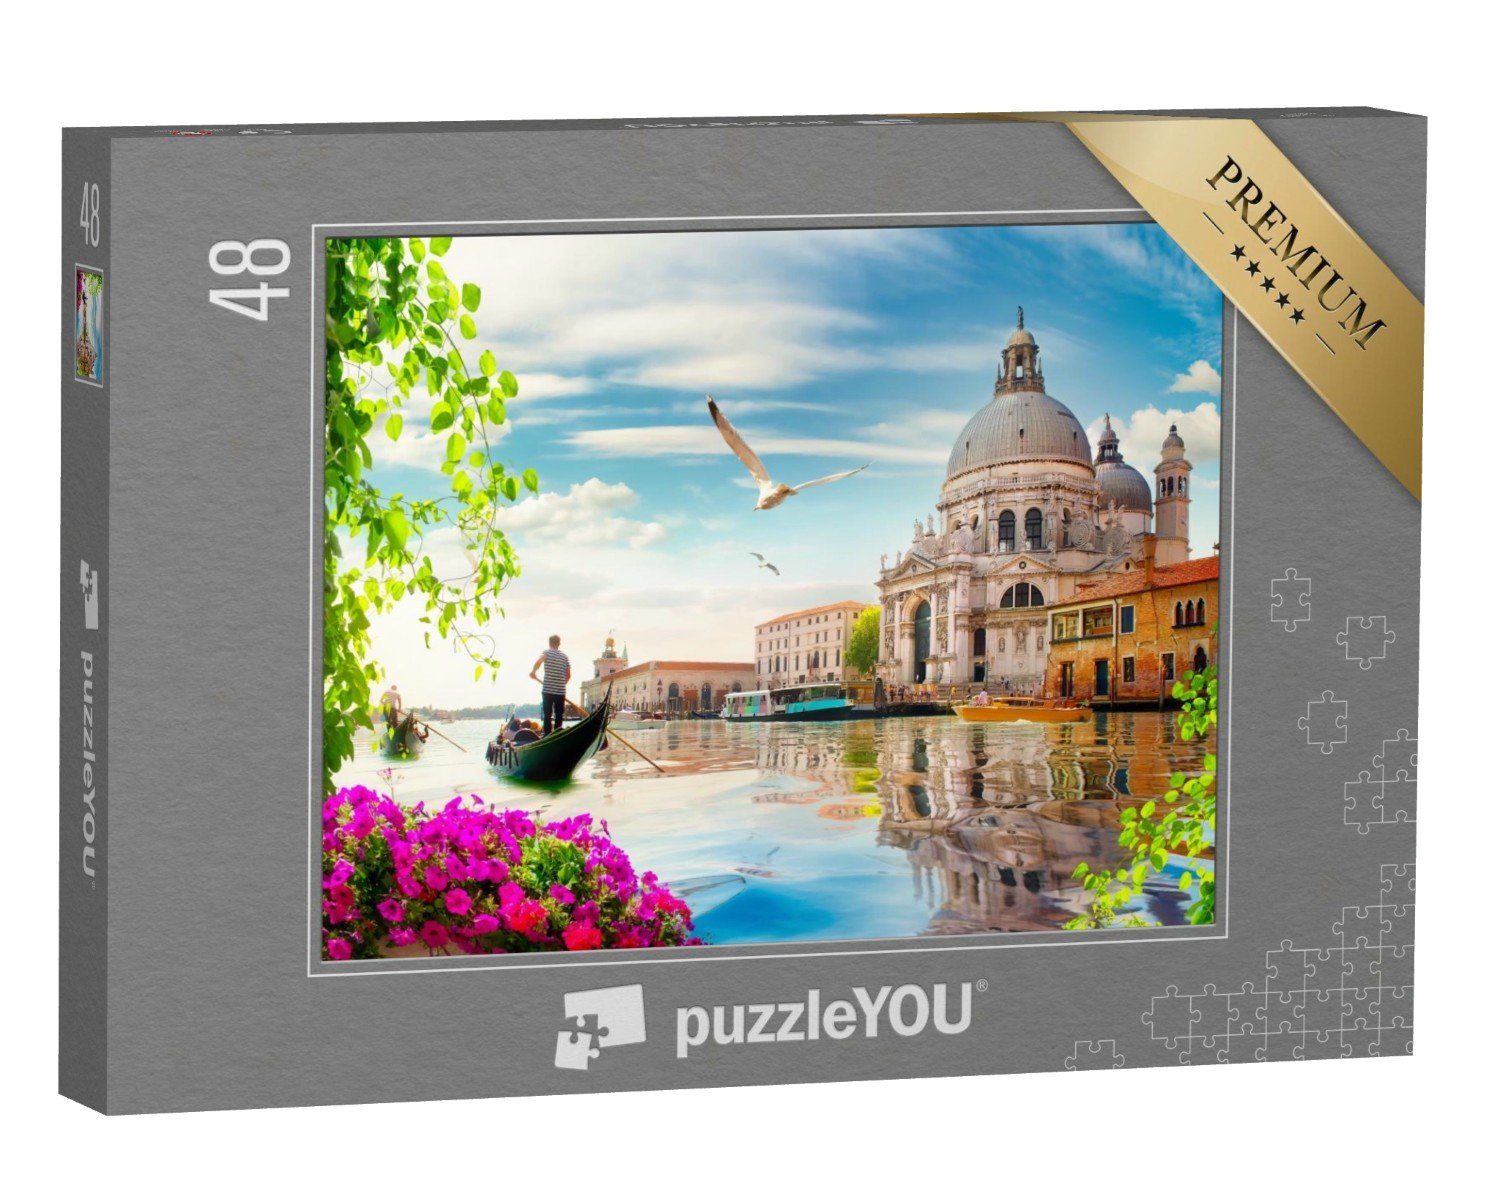 Maria Puzzle Italien, 48 Europa puzzleYOU-Kollektionen Puzzleteile, della Santa Salute in Venedig, puzzleYOU